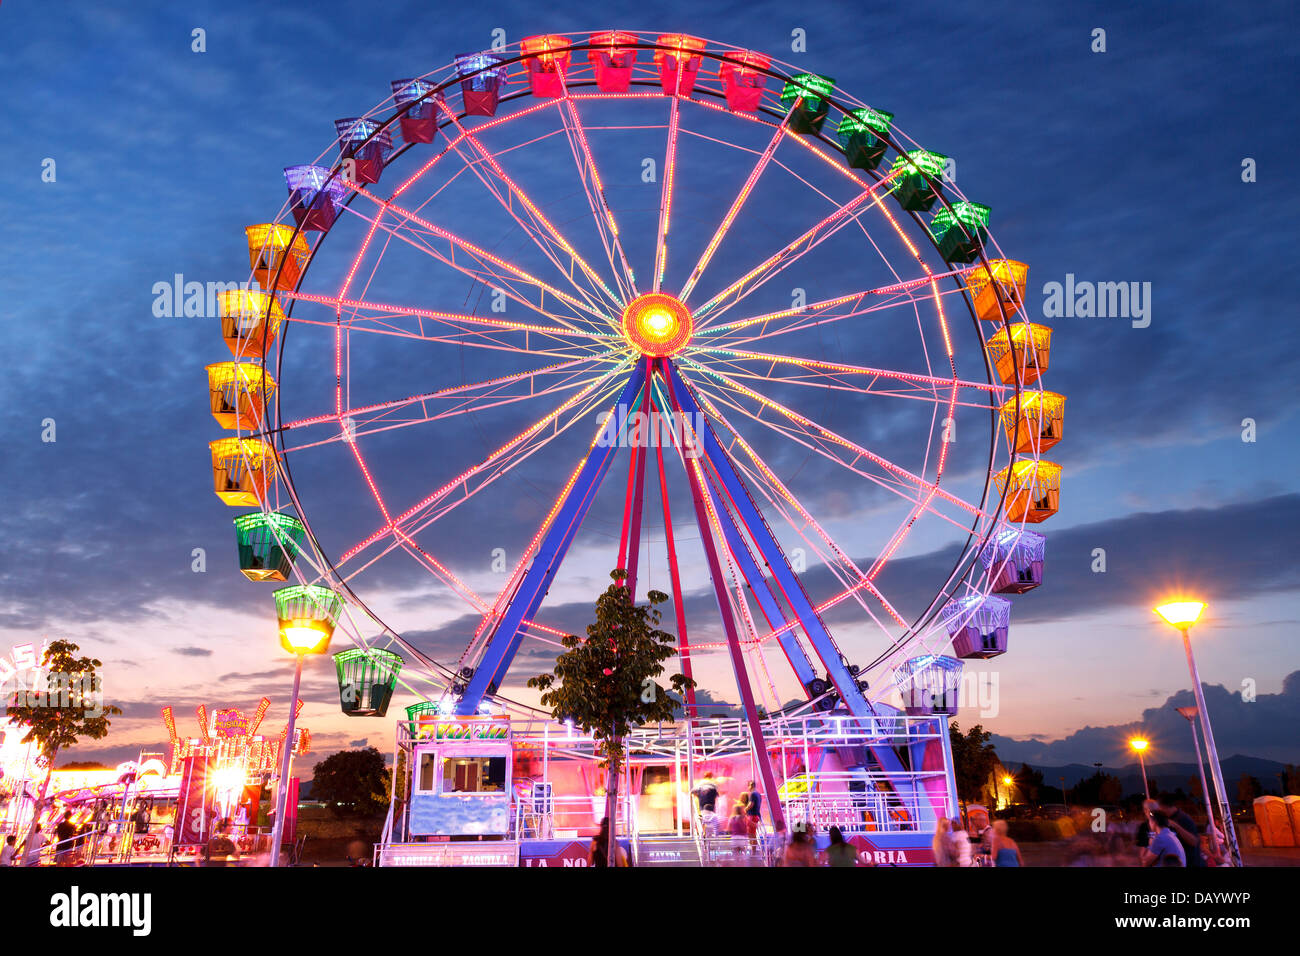 Ferris wheel in a summer night Stock Photo